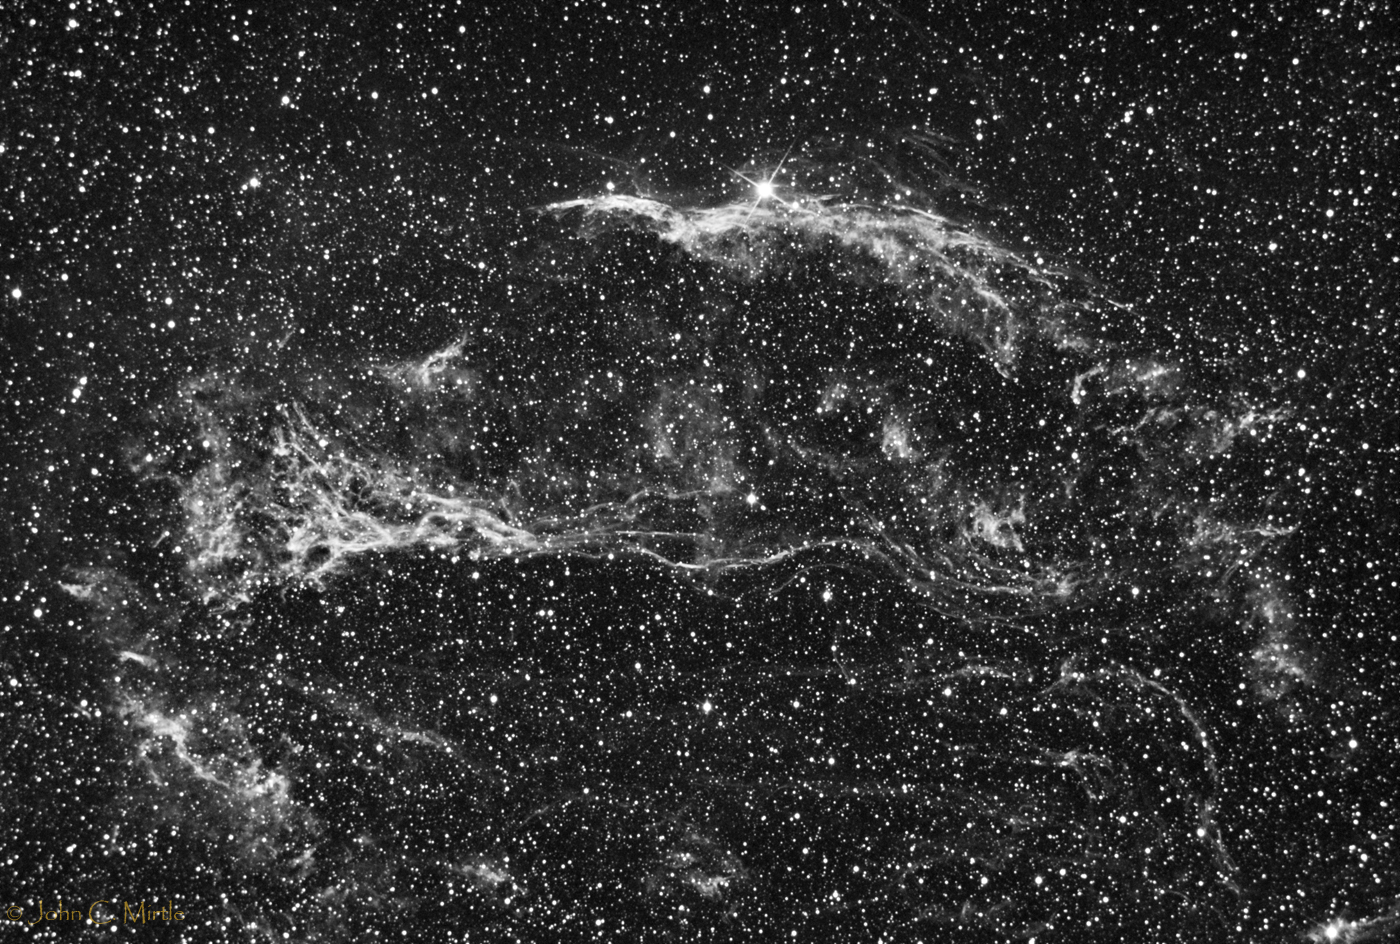 Veil Nebula - NGC6960 in Hydrogen Alpha light